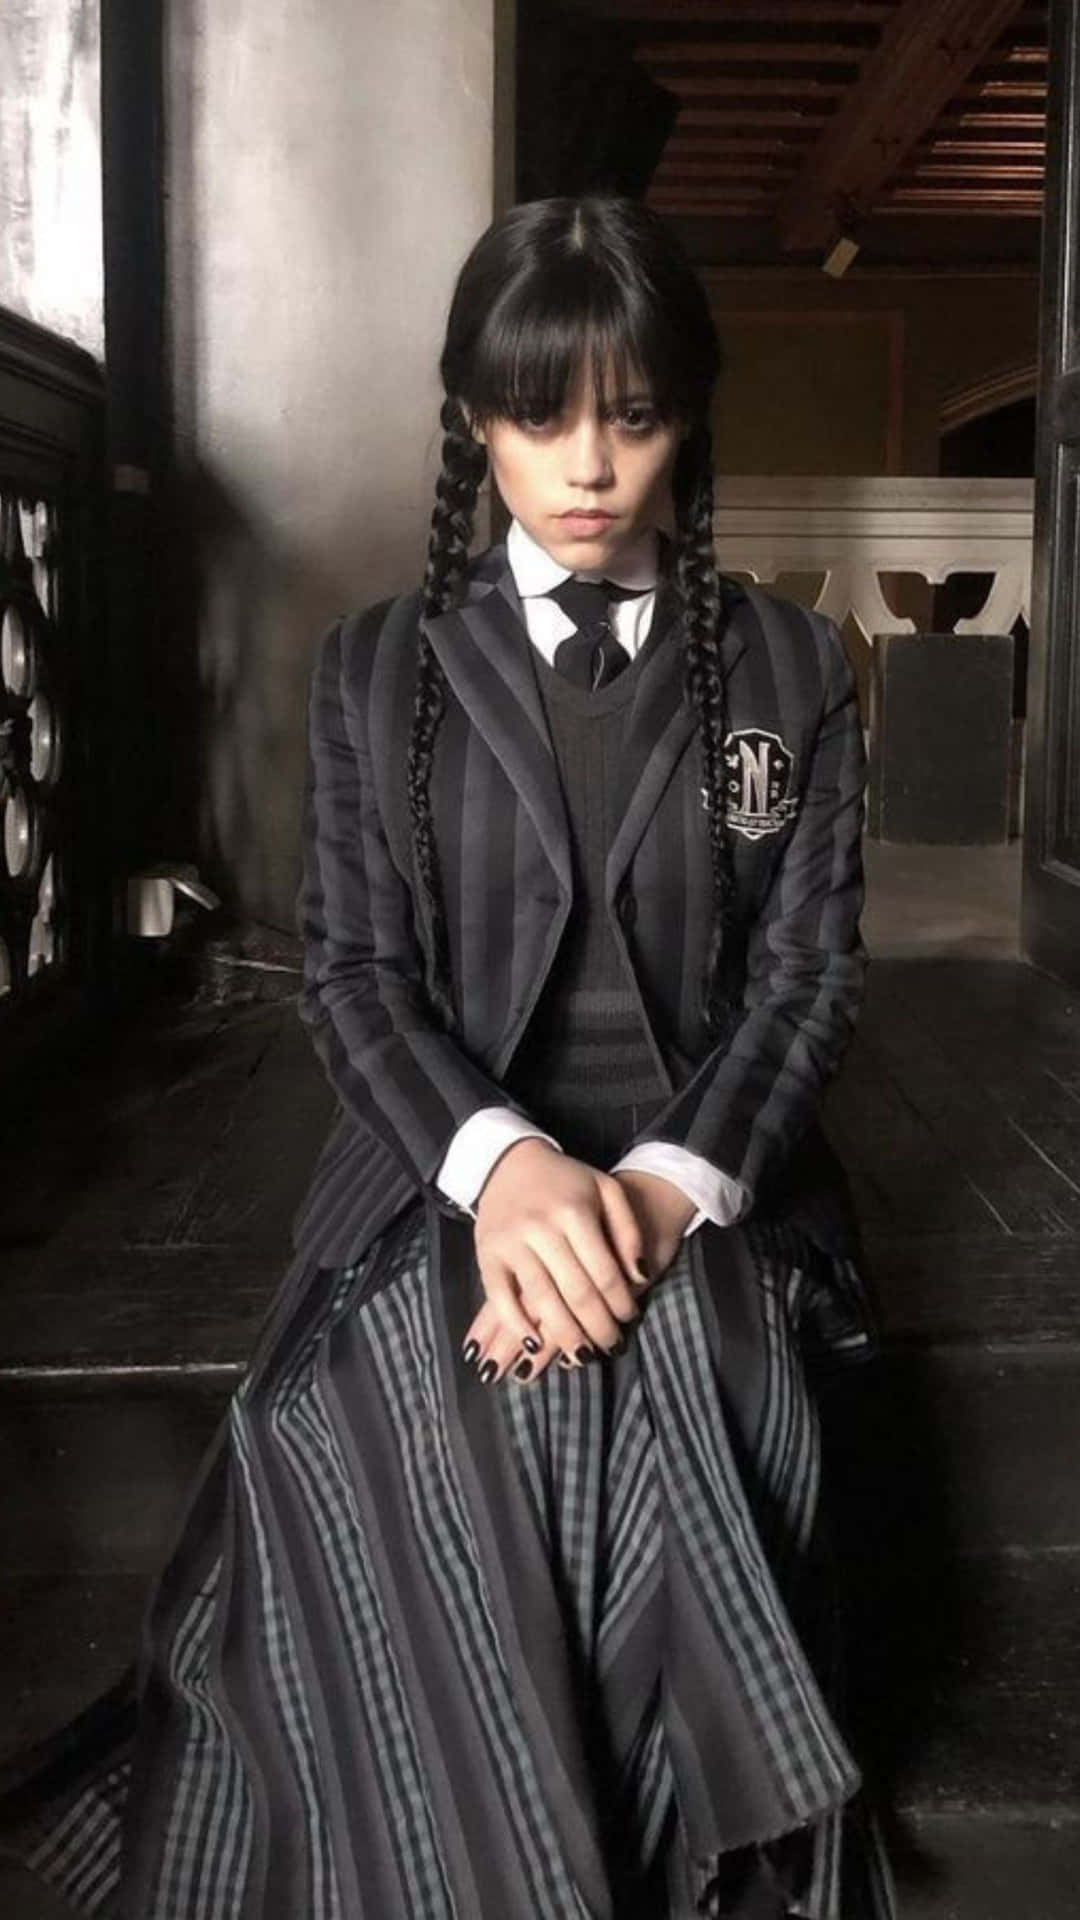 Gothic Style Schoolgirl Costume Wallpaper